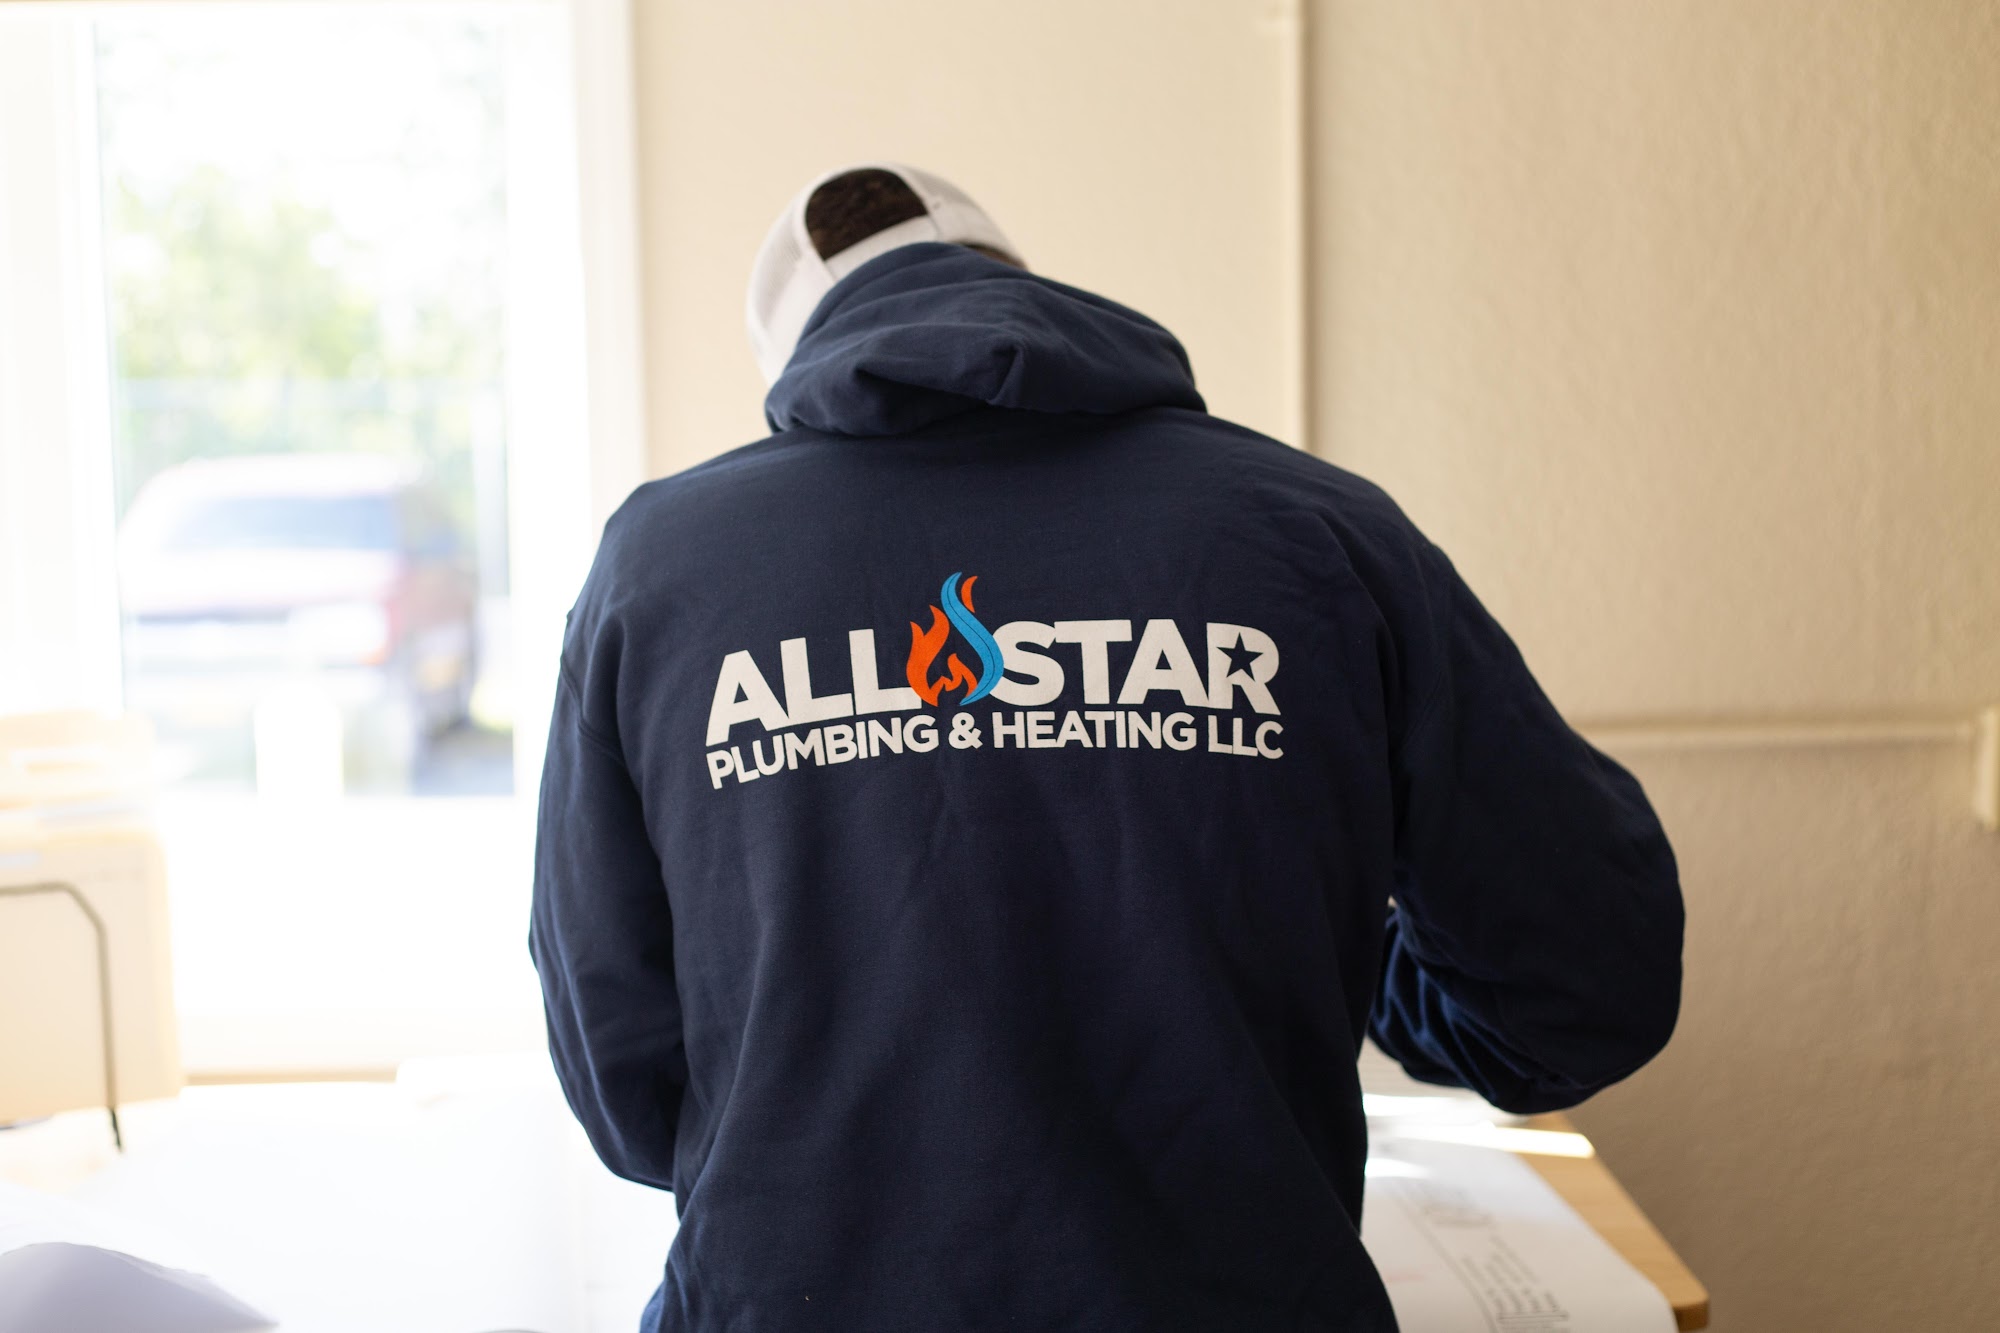 All-Star Plumbing & Heating LLC